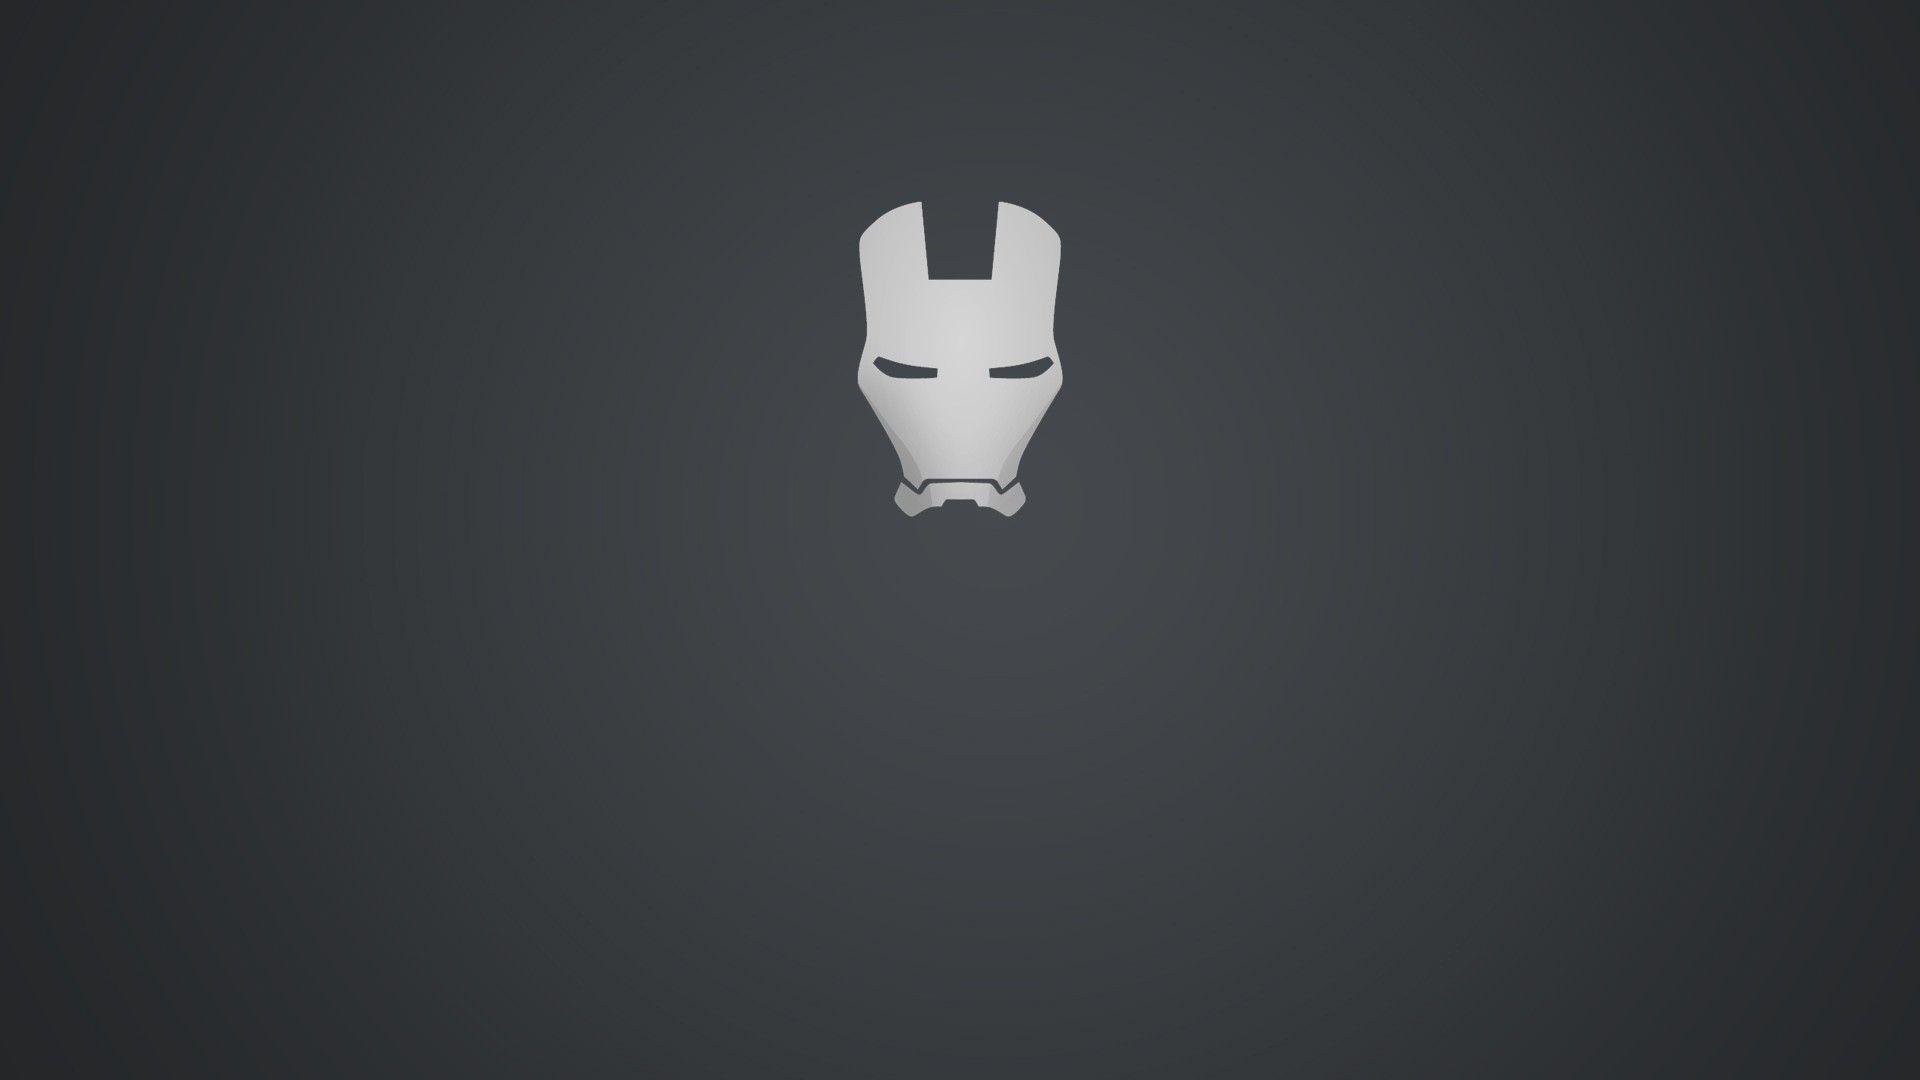 Iron Man Simple HD Artist, 4k Wallpaper, Image, Background